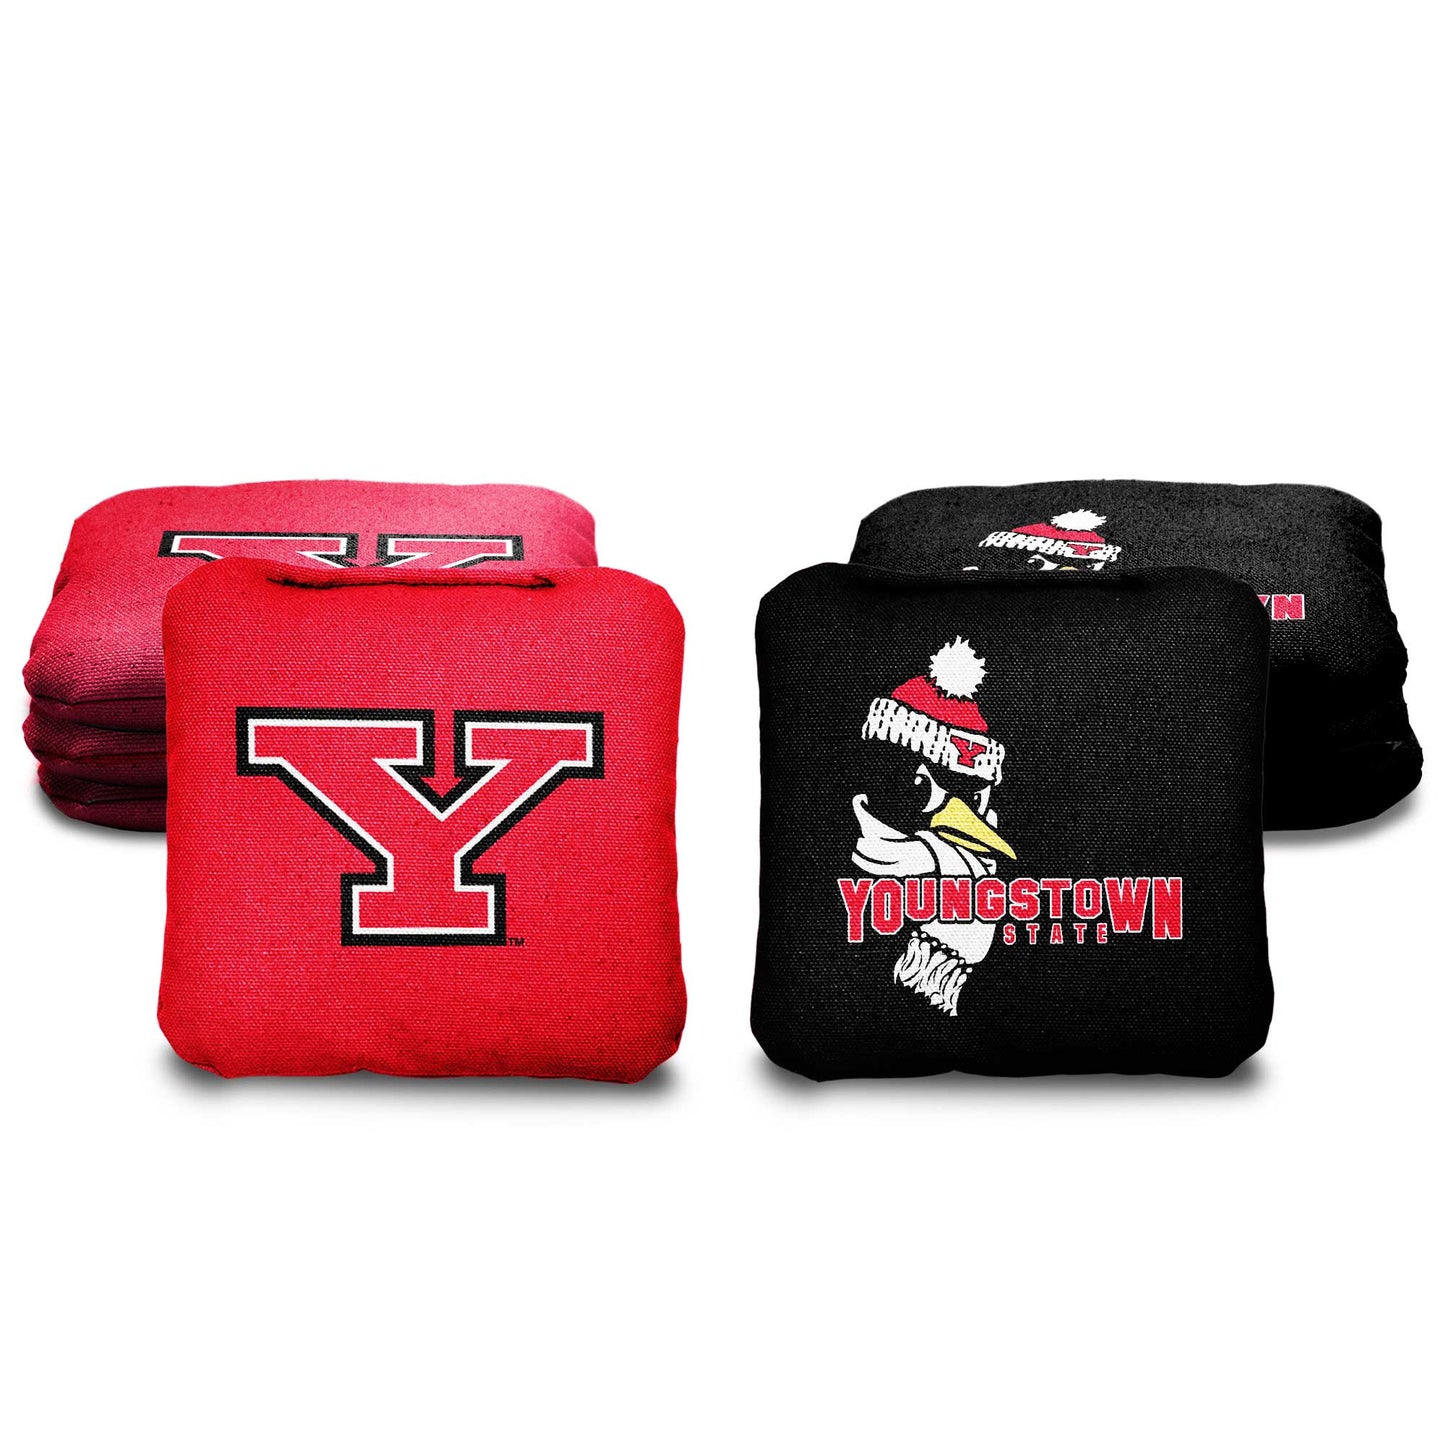 Youngstown State University Cornhole Bags - 8 Cornhole Bags